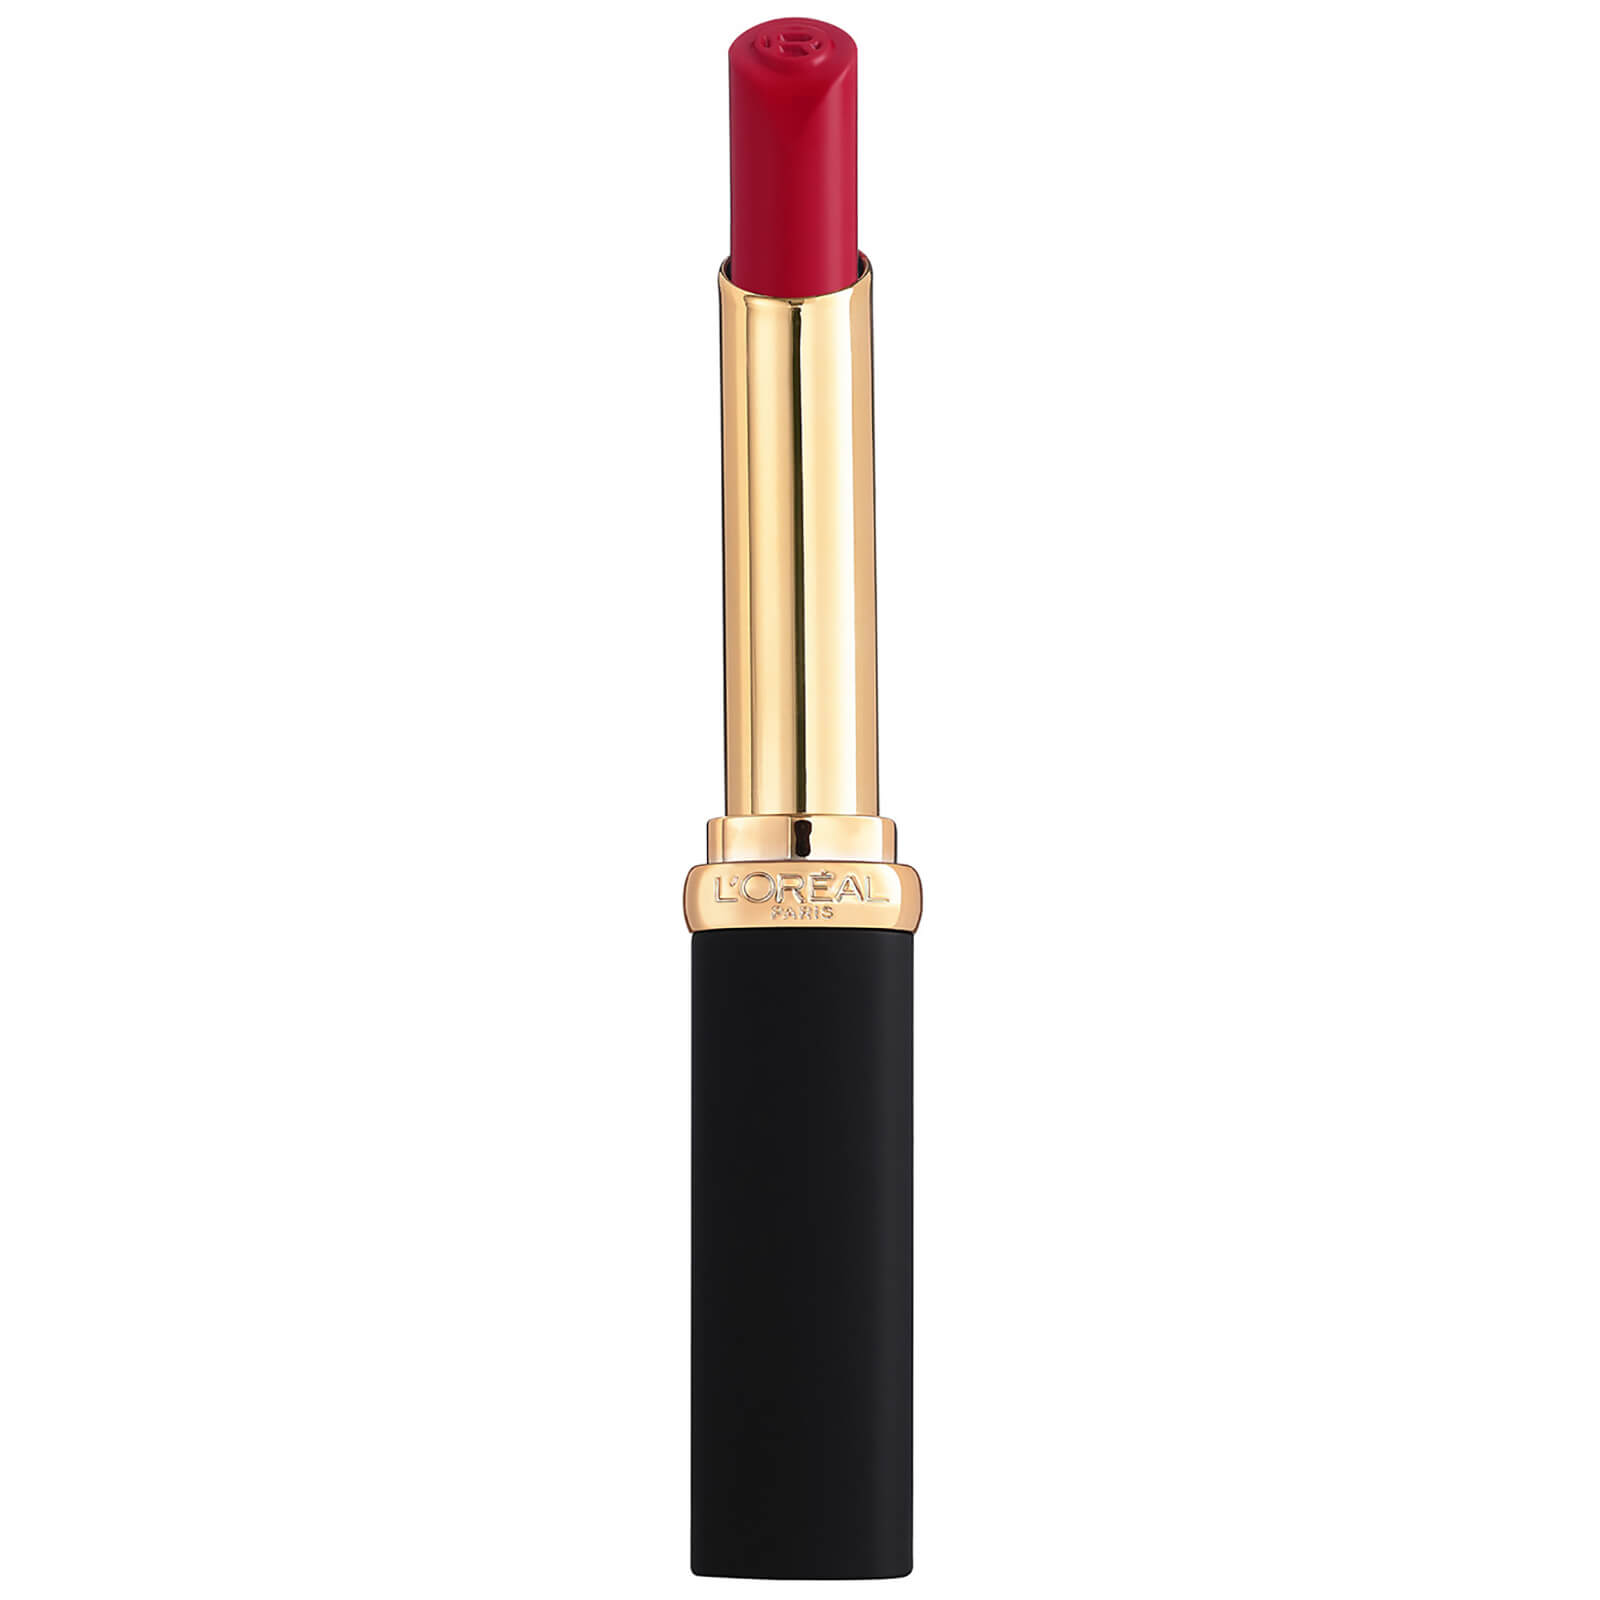 L'Oreal Paris Colour Riche Intense Volume Matte Lipstick 25g (Various Shades) - Fushia Libre